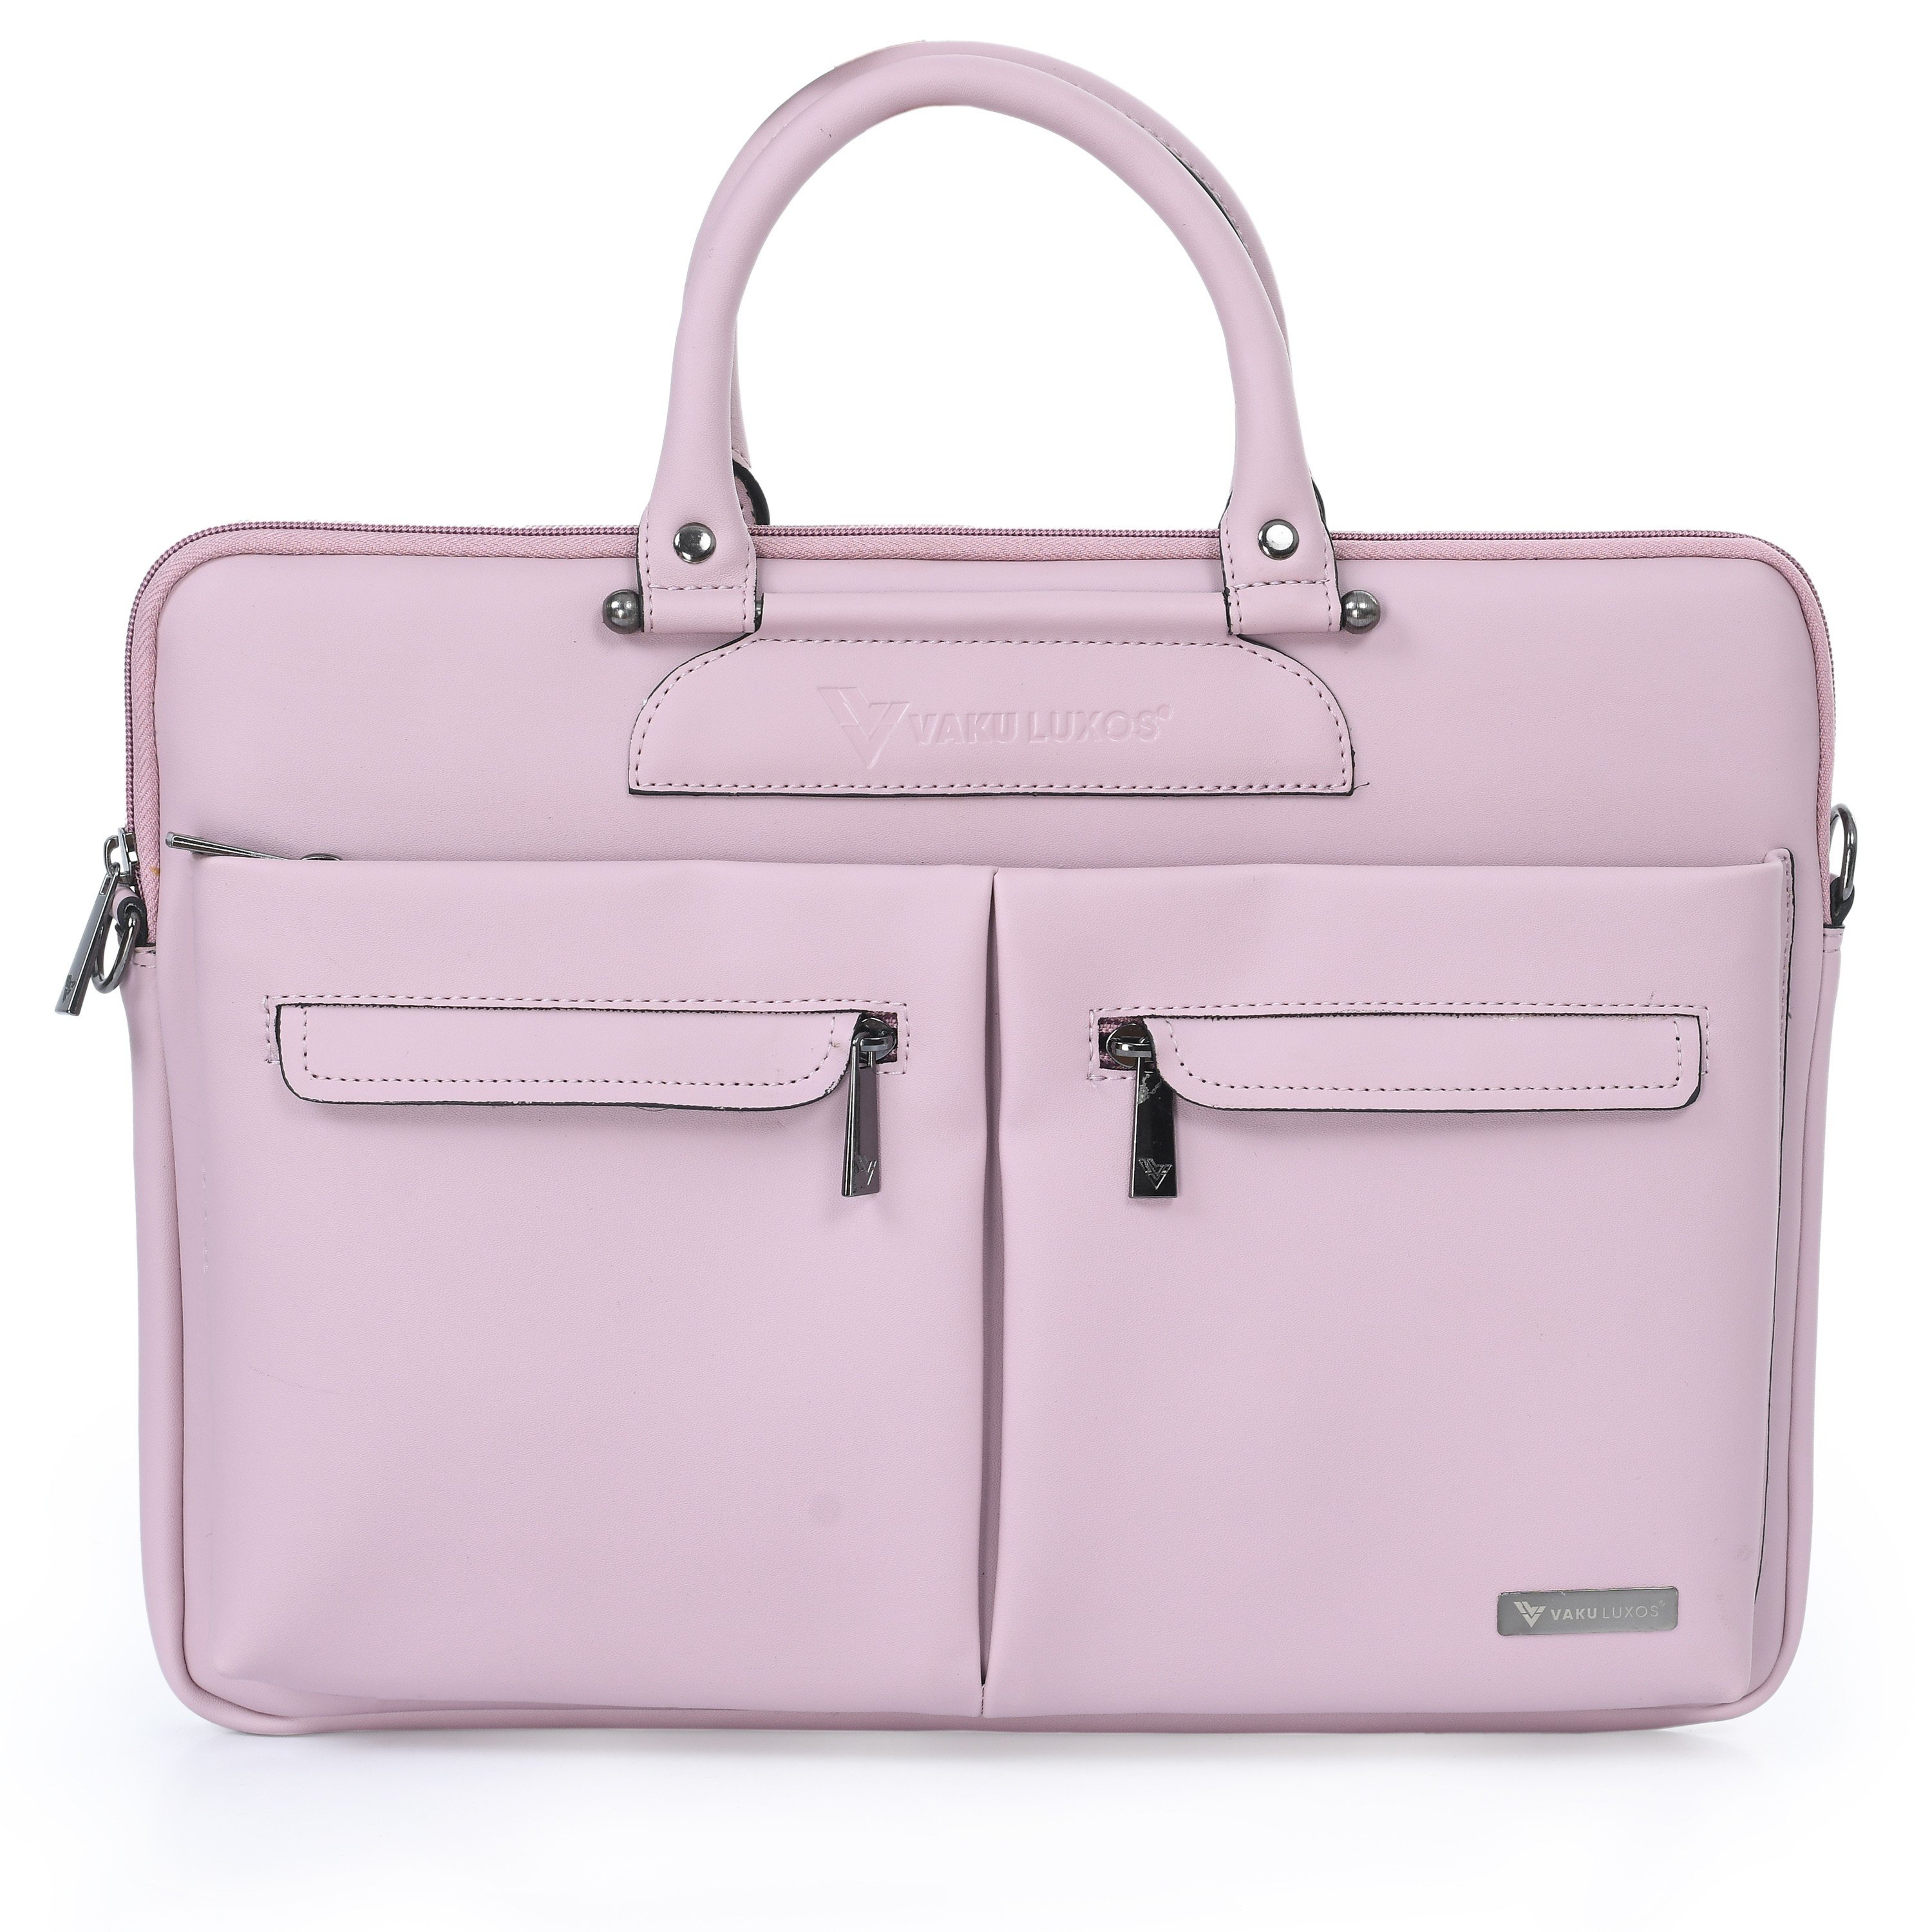 Vaku Luxos ® Marcella 14 inch Laptop Sleeve Bag Premium Messenger Bag ...